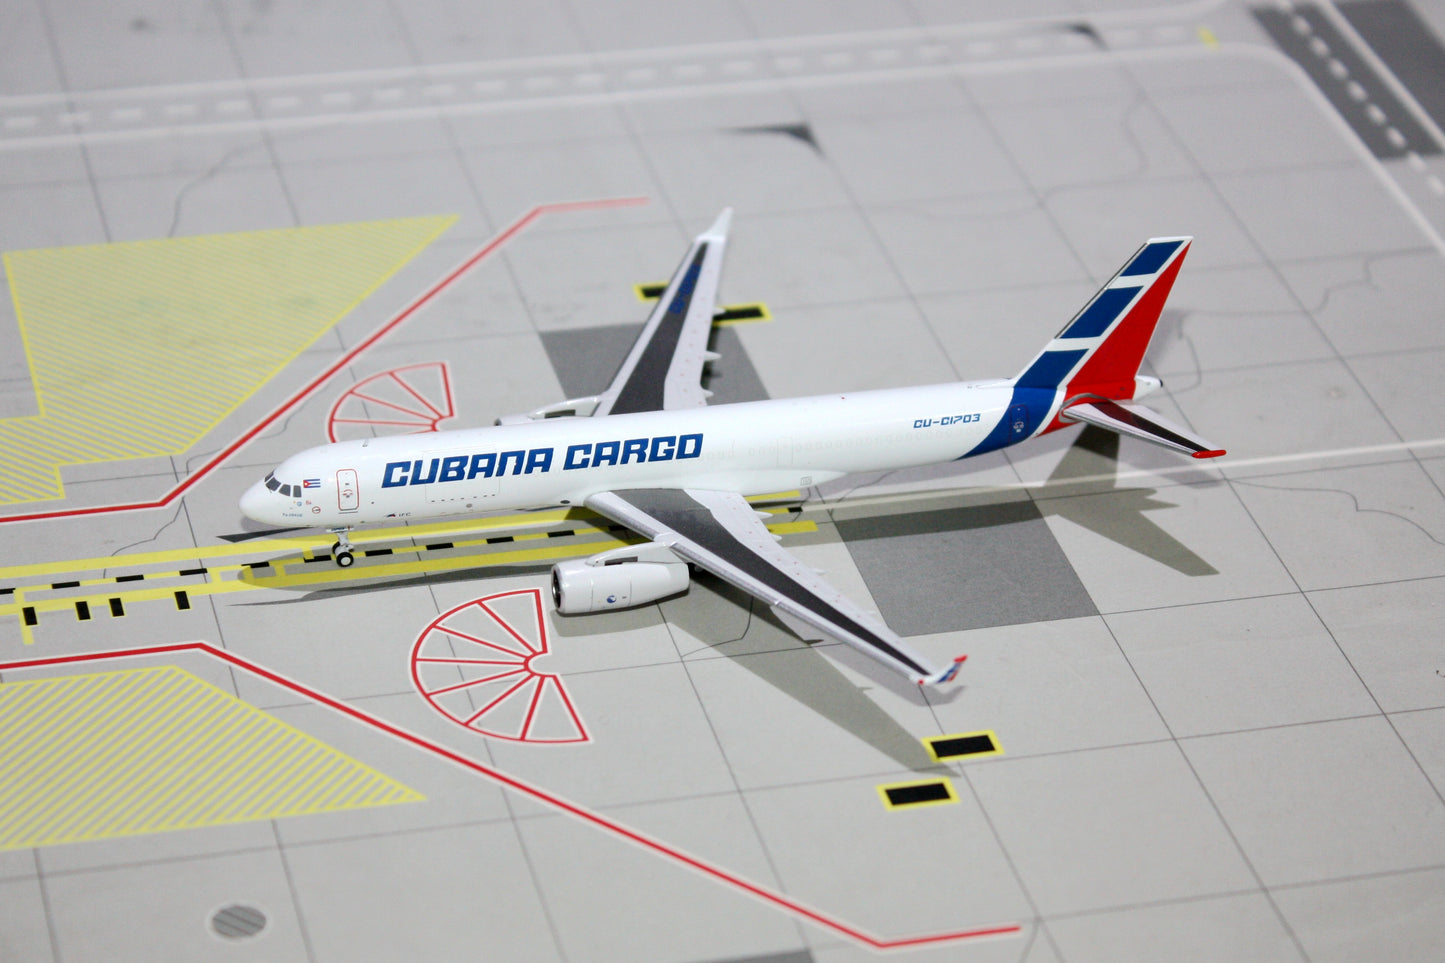 1:400 Panda Models Cubana Cargo TU-204-100CE CU-C1703 202117